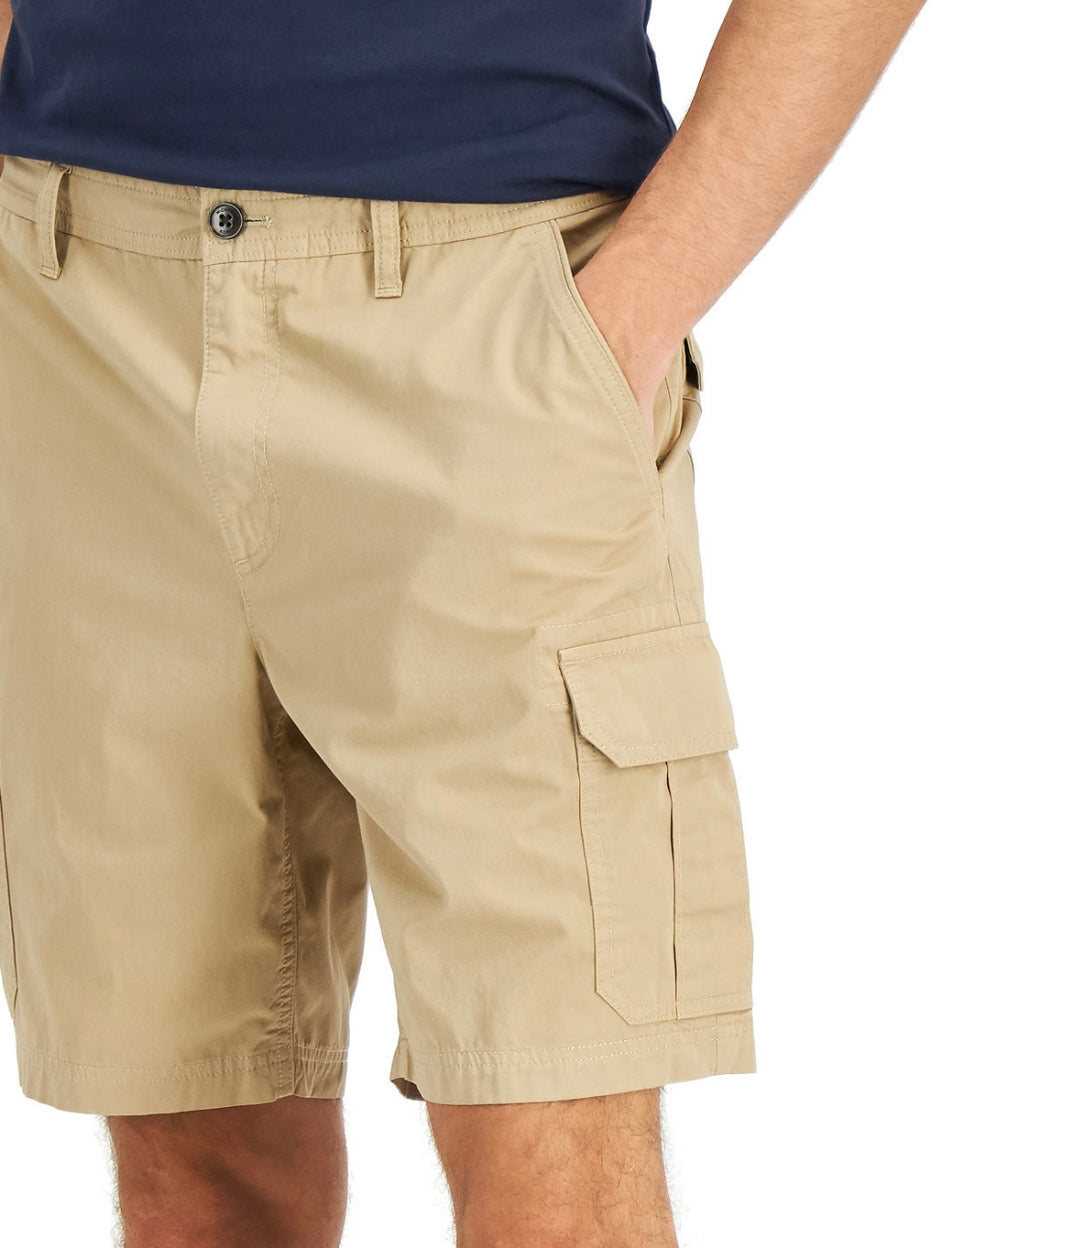 Michael Kors Men's Slim-Fit Garment-Dyed Cargo Shorts Chino Size 33